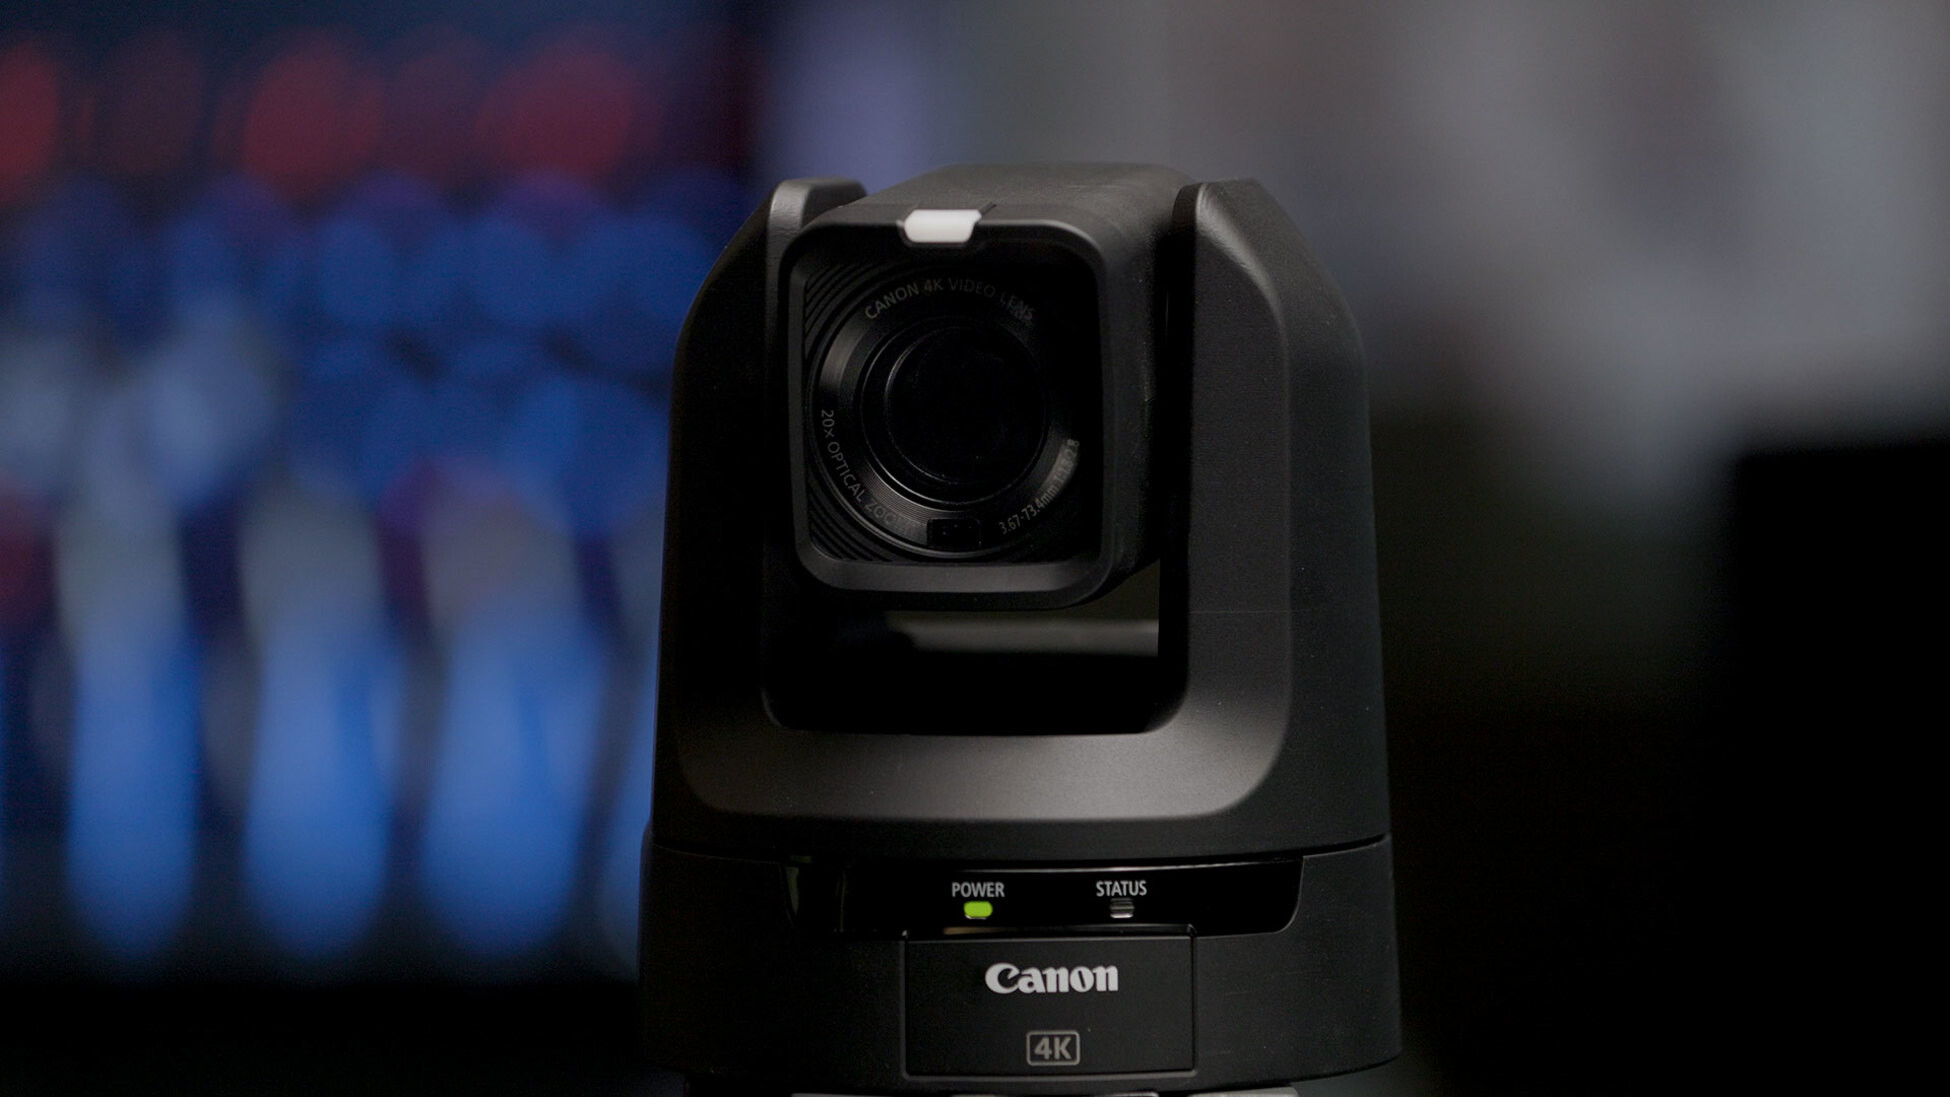 Canon-CR-N300-PTZ-Kamera-4K-20x-Zoom-8-29-MP-CMOS-Sensor-schwarz